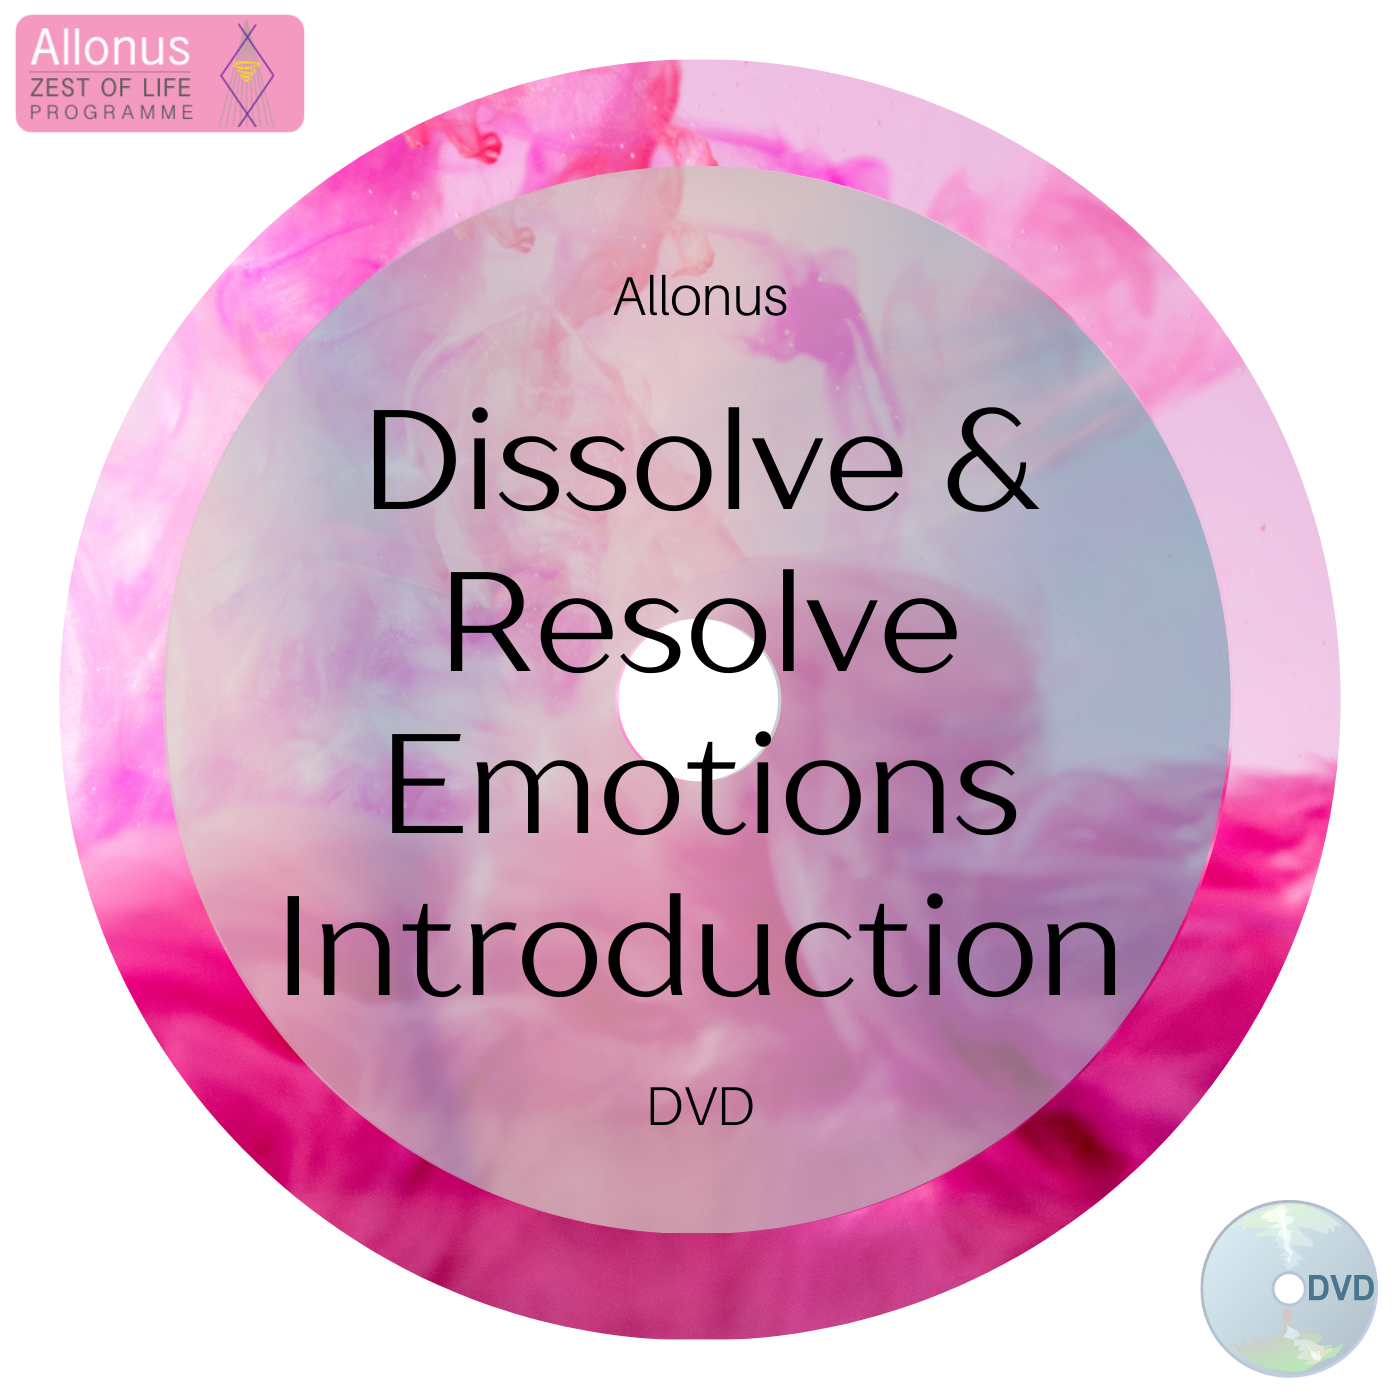 Dissolve &  Resolve Emotions Introduction DVD